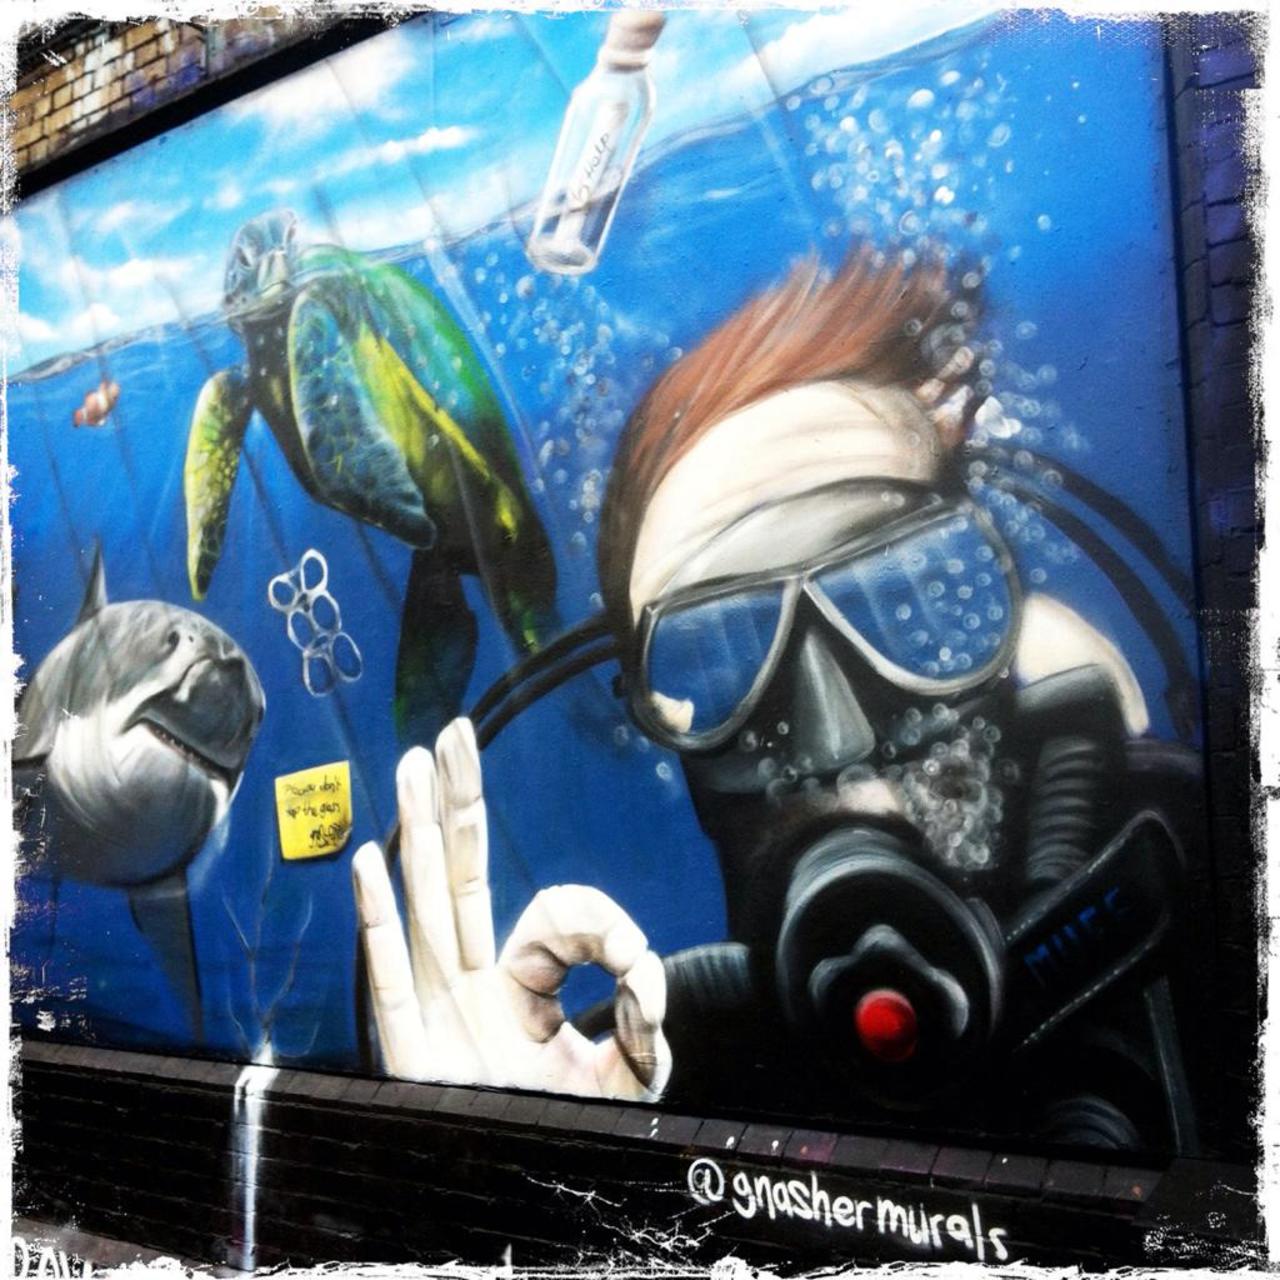 RT @BrickLaneArt: Great work (now gone tho) by @GnasherMurals at the #ShoreditchCurtain

#streetart #graffiti #art http://t.co/8YrI7JJhHL